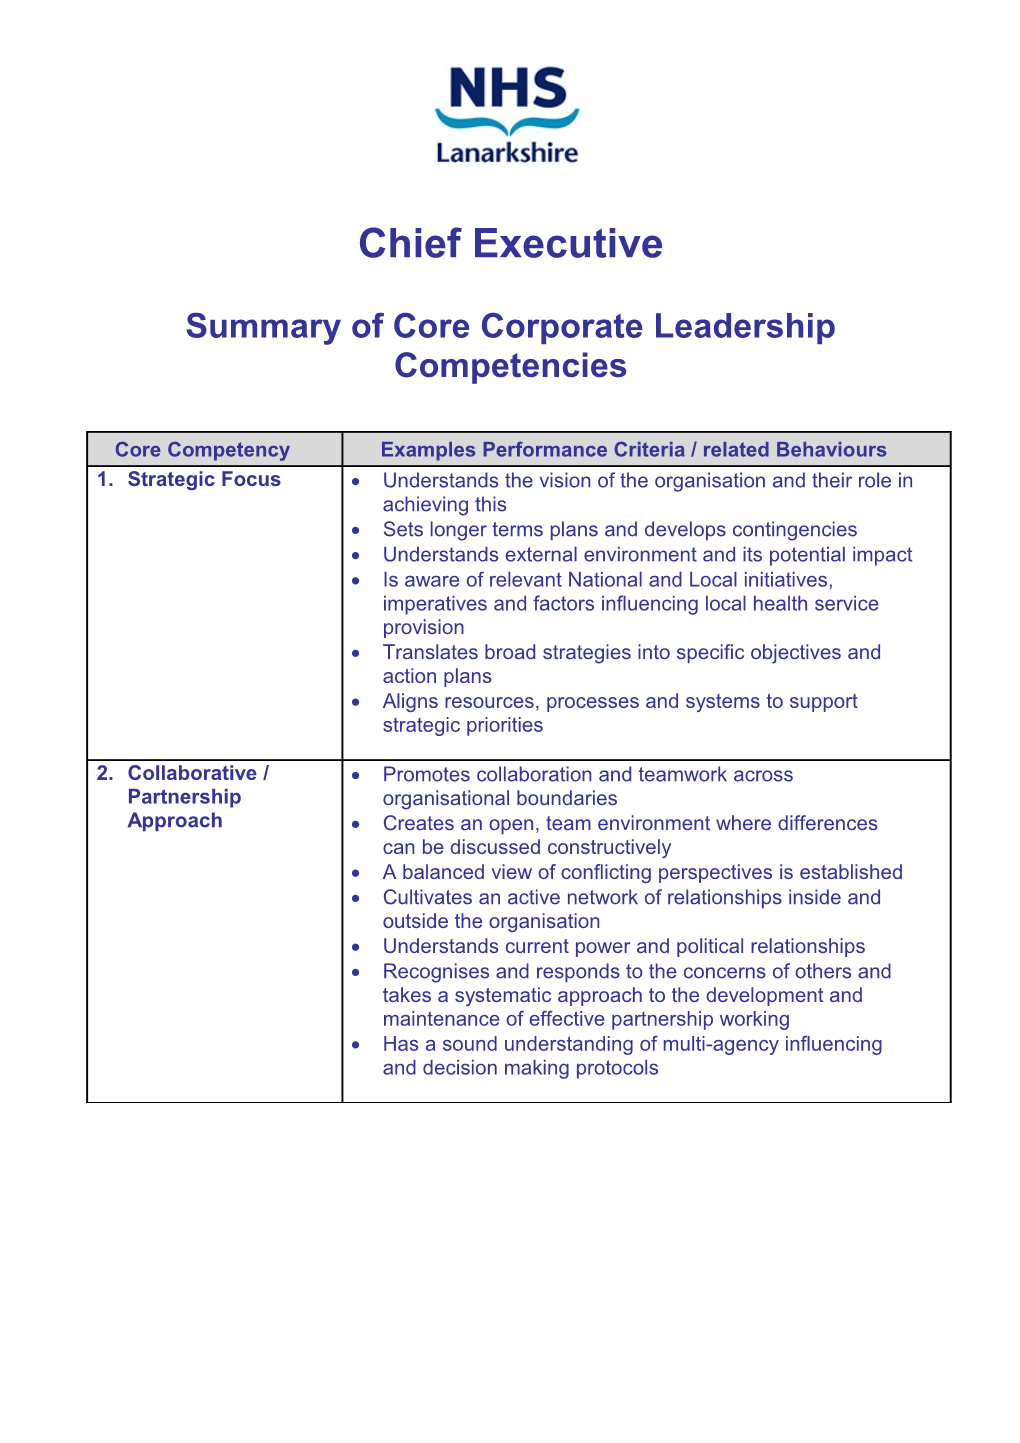 Summary of Core Corporate Leadership Competencies